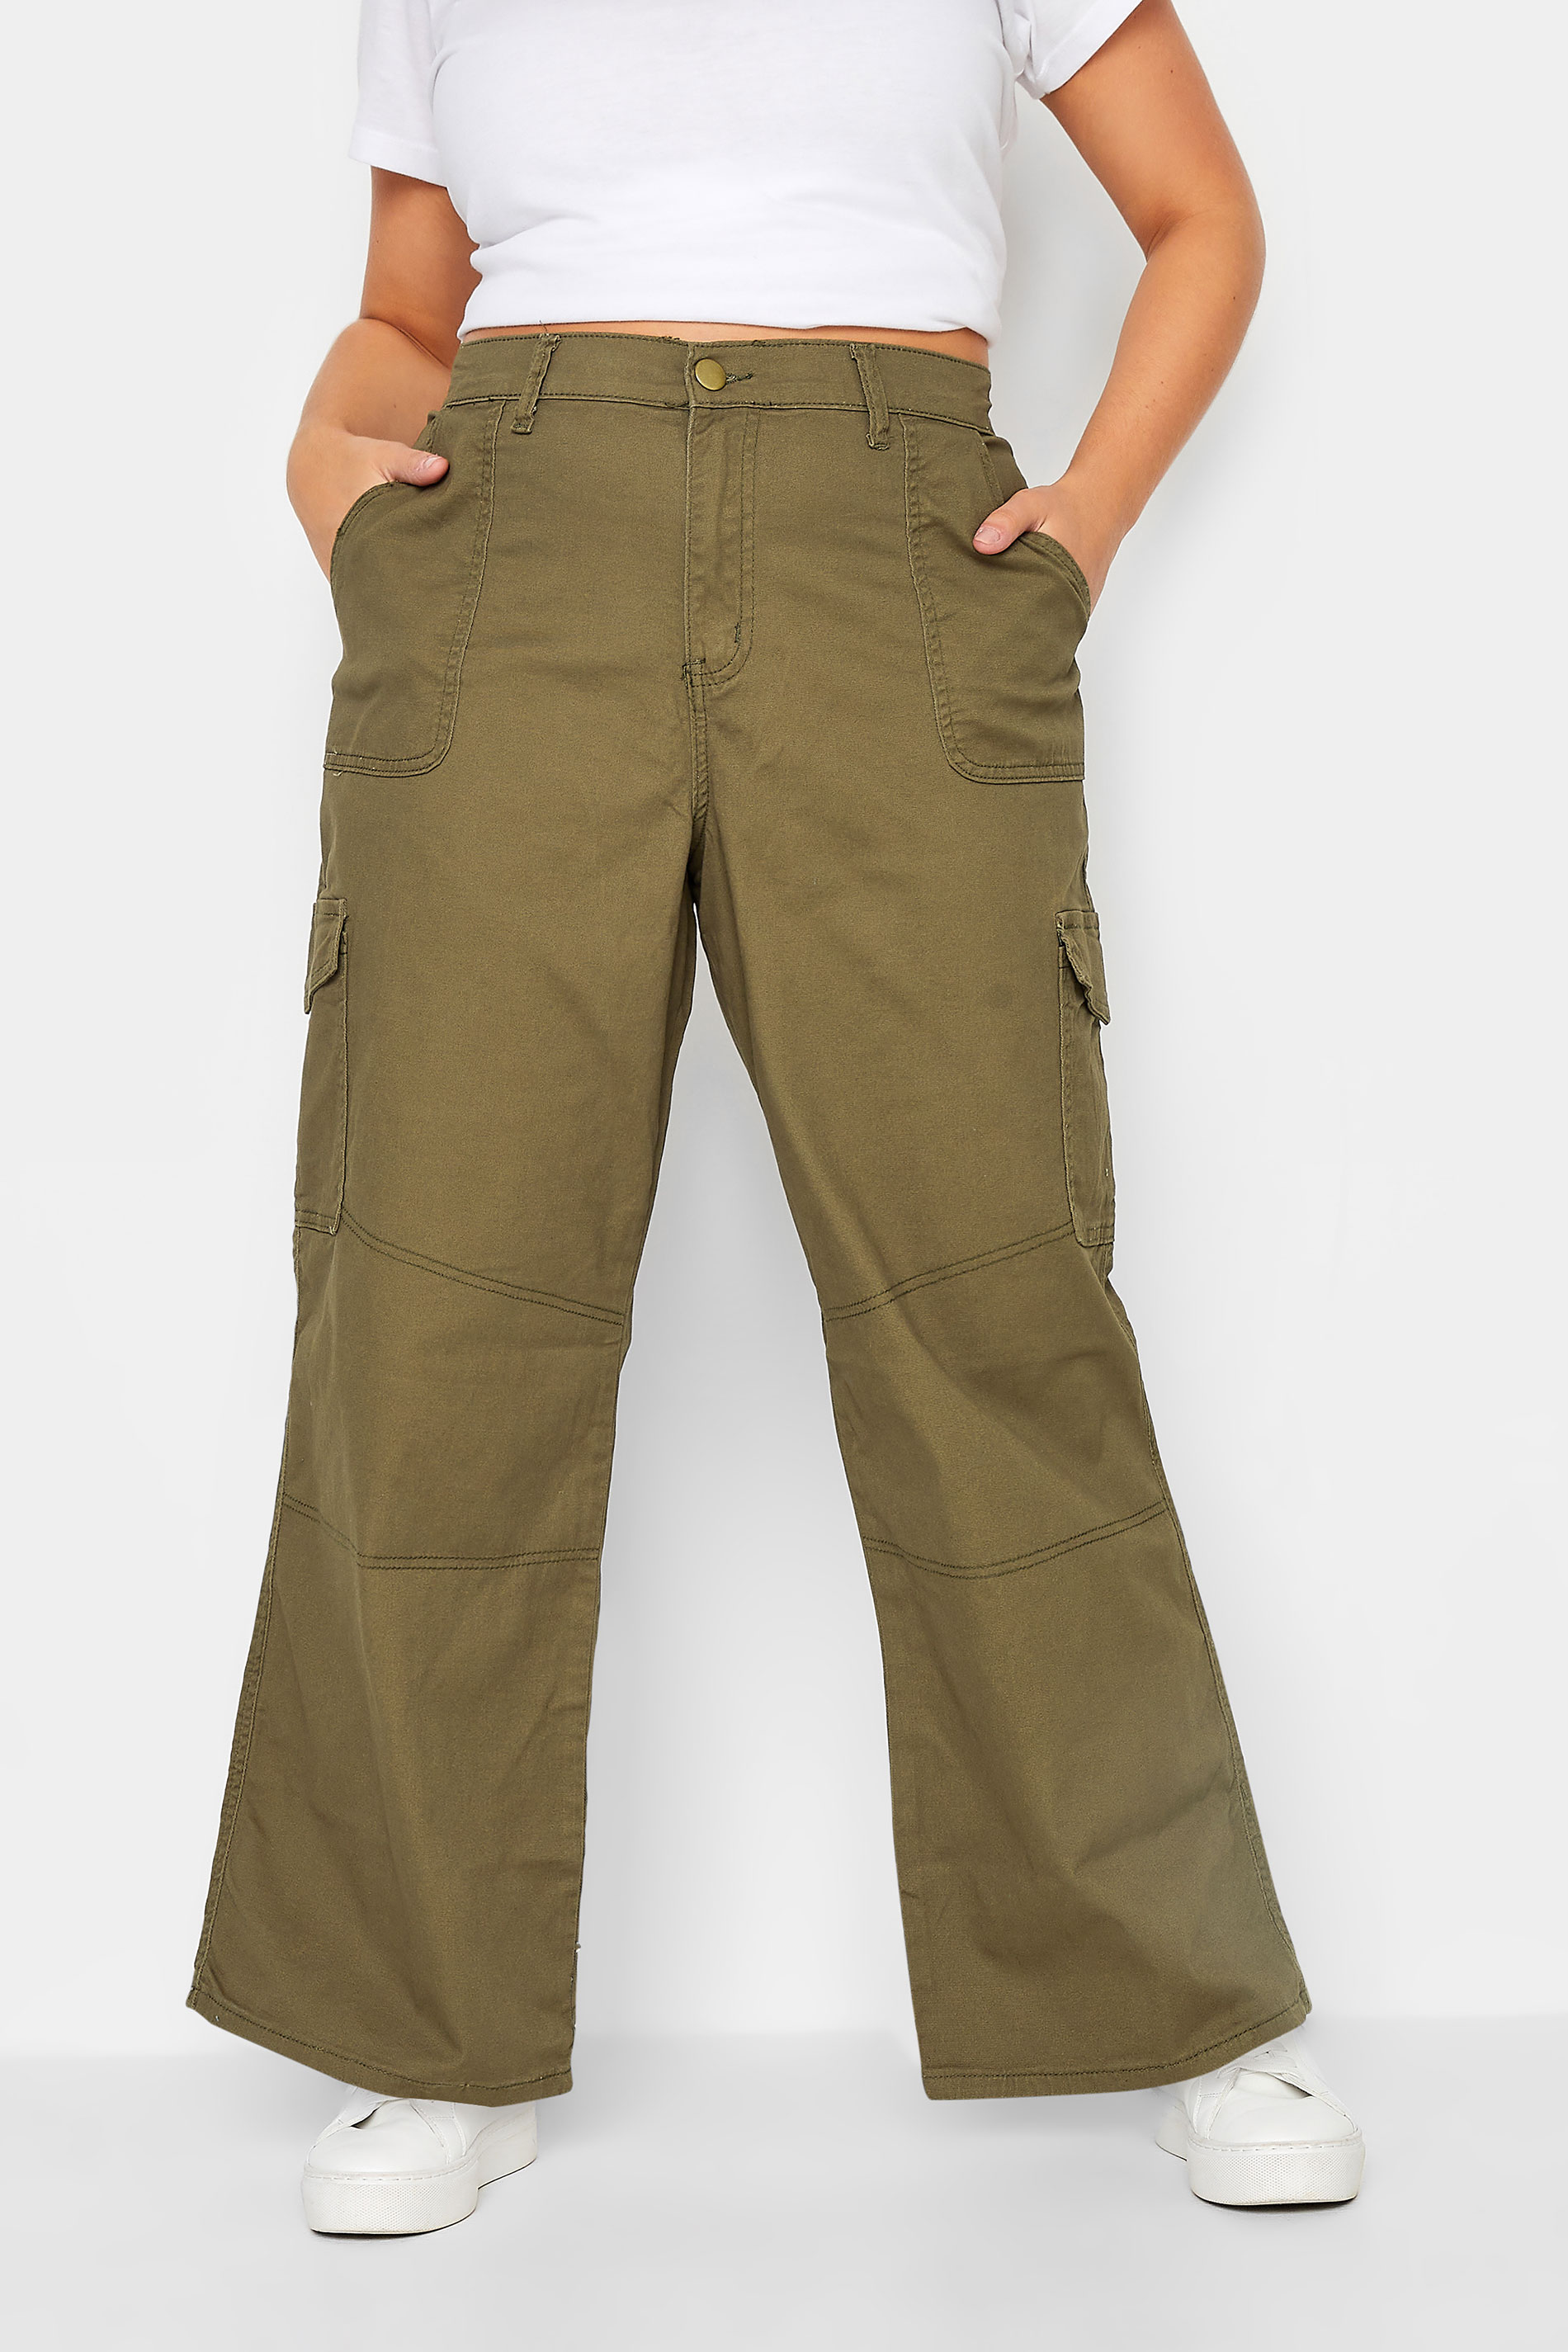 Emerald Green Trousers - High-Waisted Pants - Straight Leg Pants - Lulus